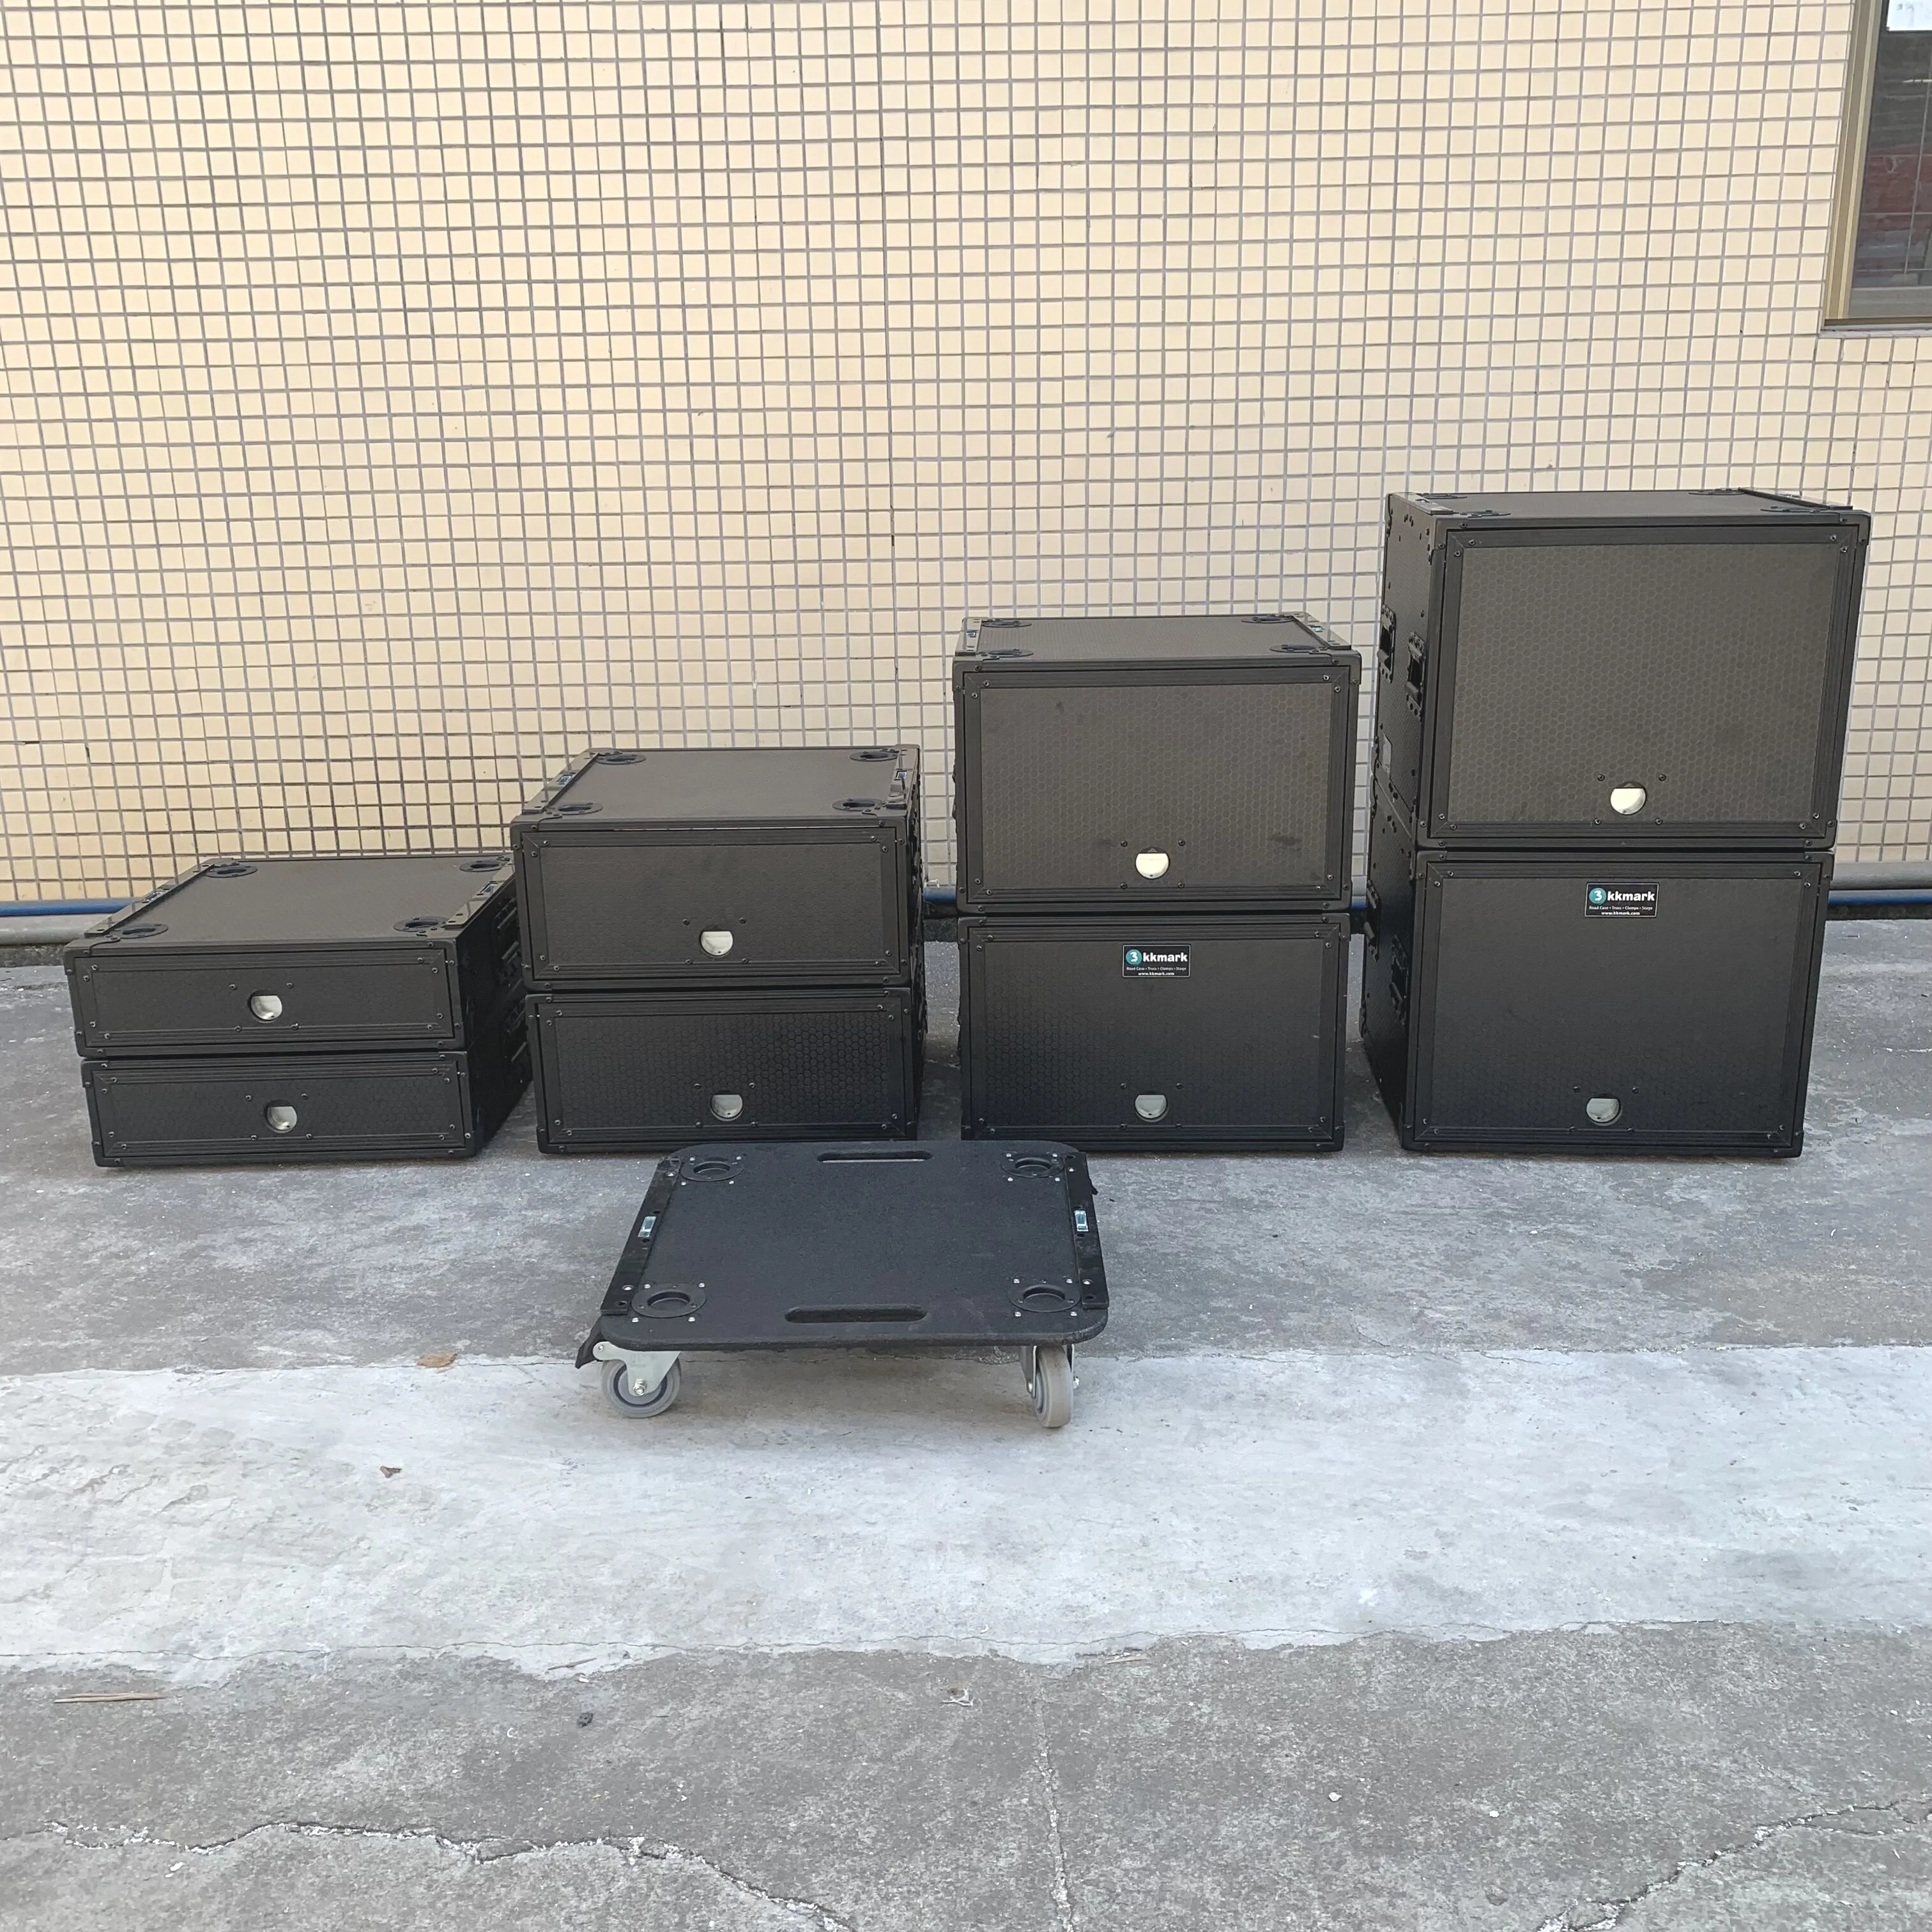 KKMARK custom נייד באיכות גבוהה תא מטען כביש שירות DJ מיקסר קונסולת מתקפל Workstation צד שולחן טיסה כביש מגירת מקרה